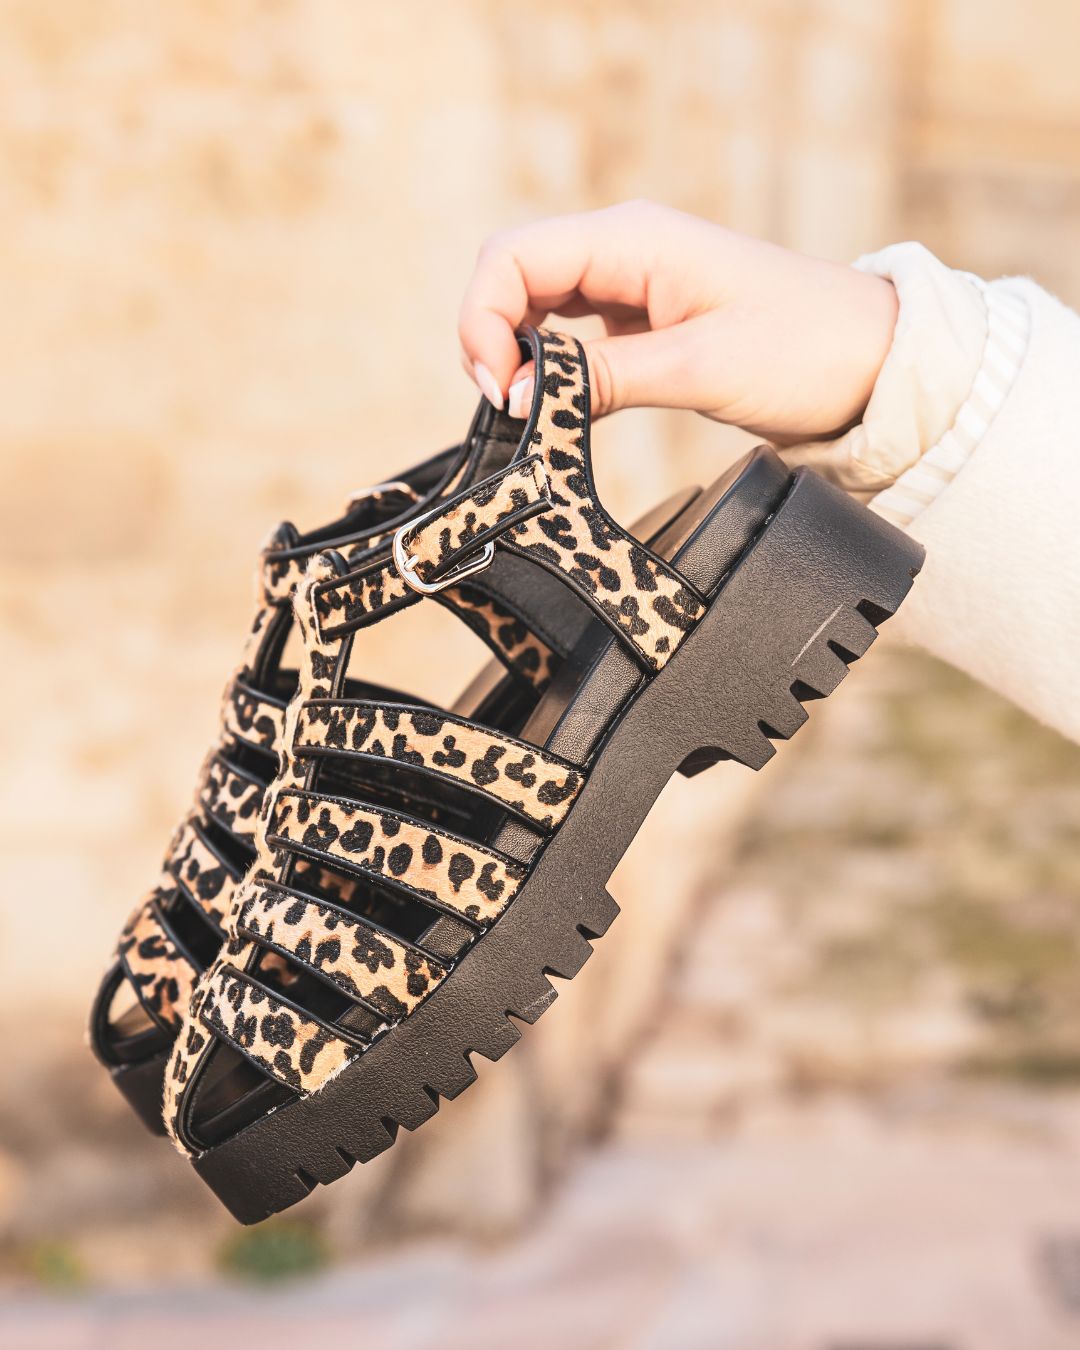 Sandale femme plateforme confort motif léopard - Margaux - Casualmode.fr